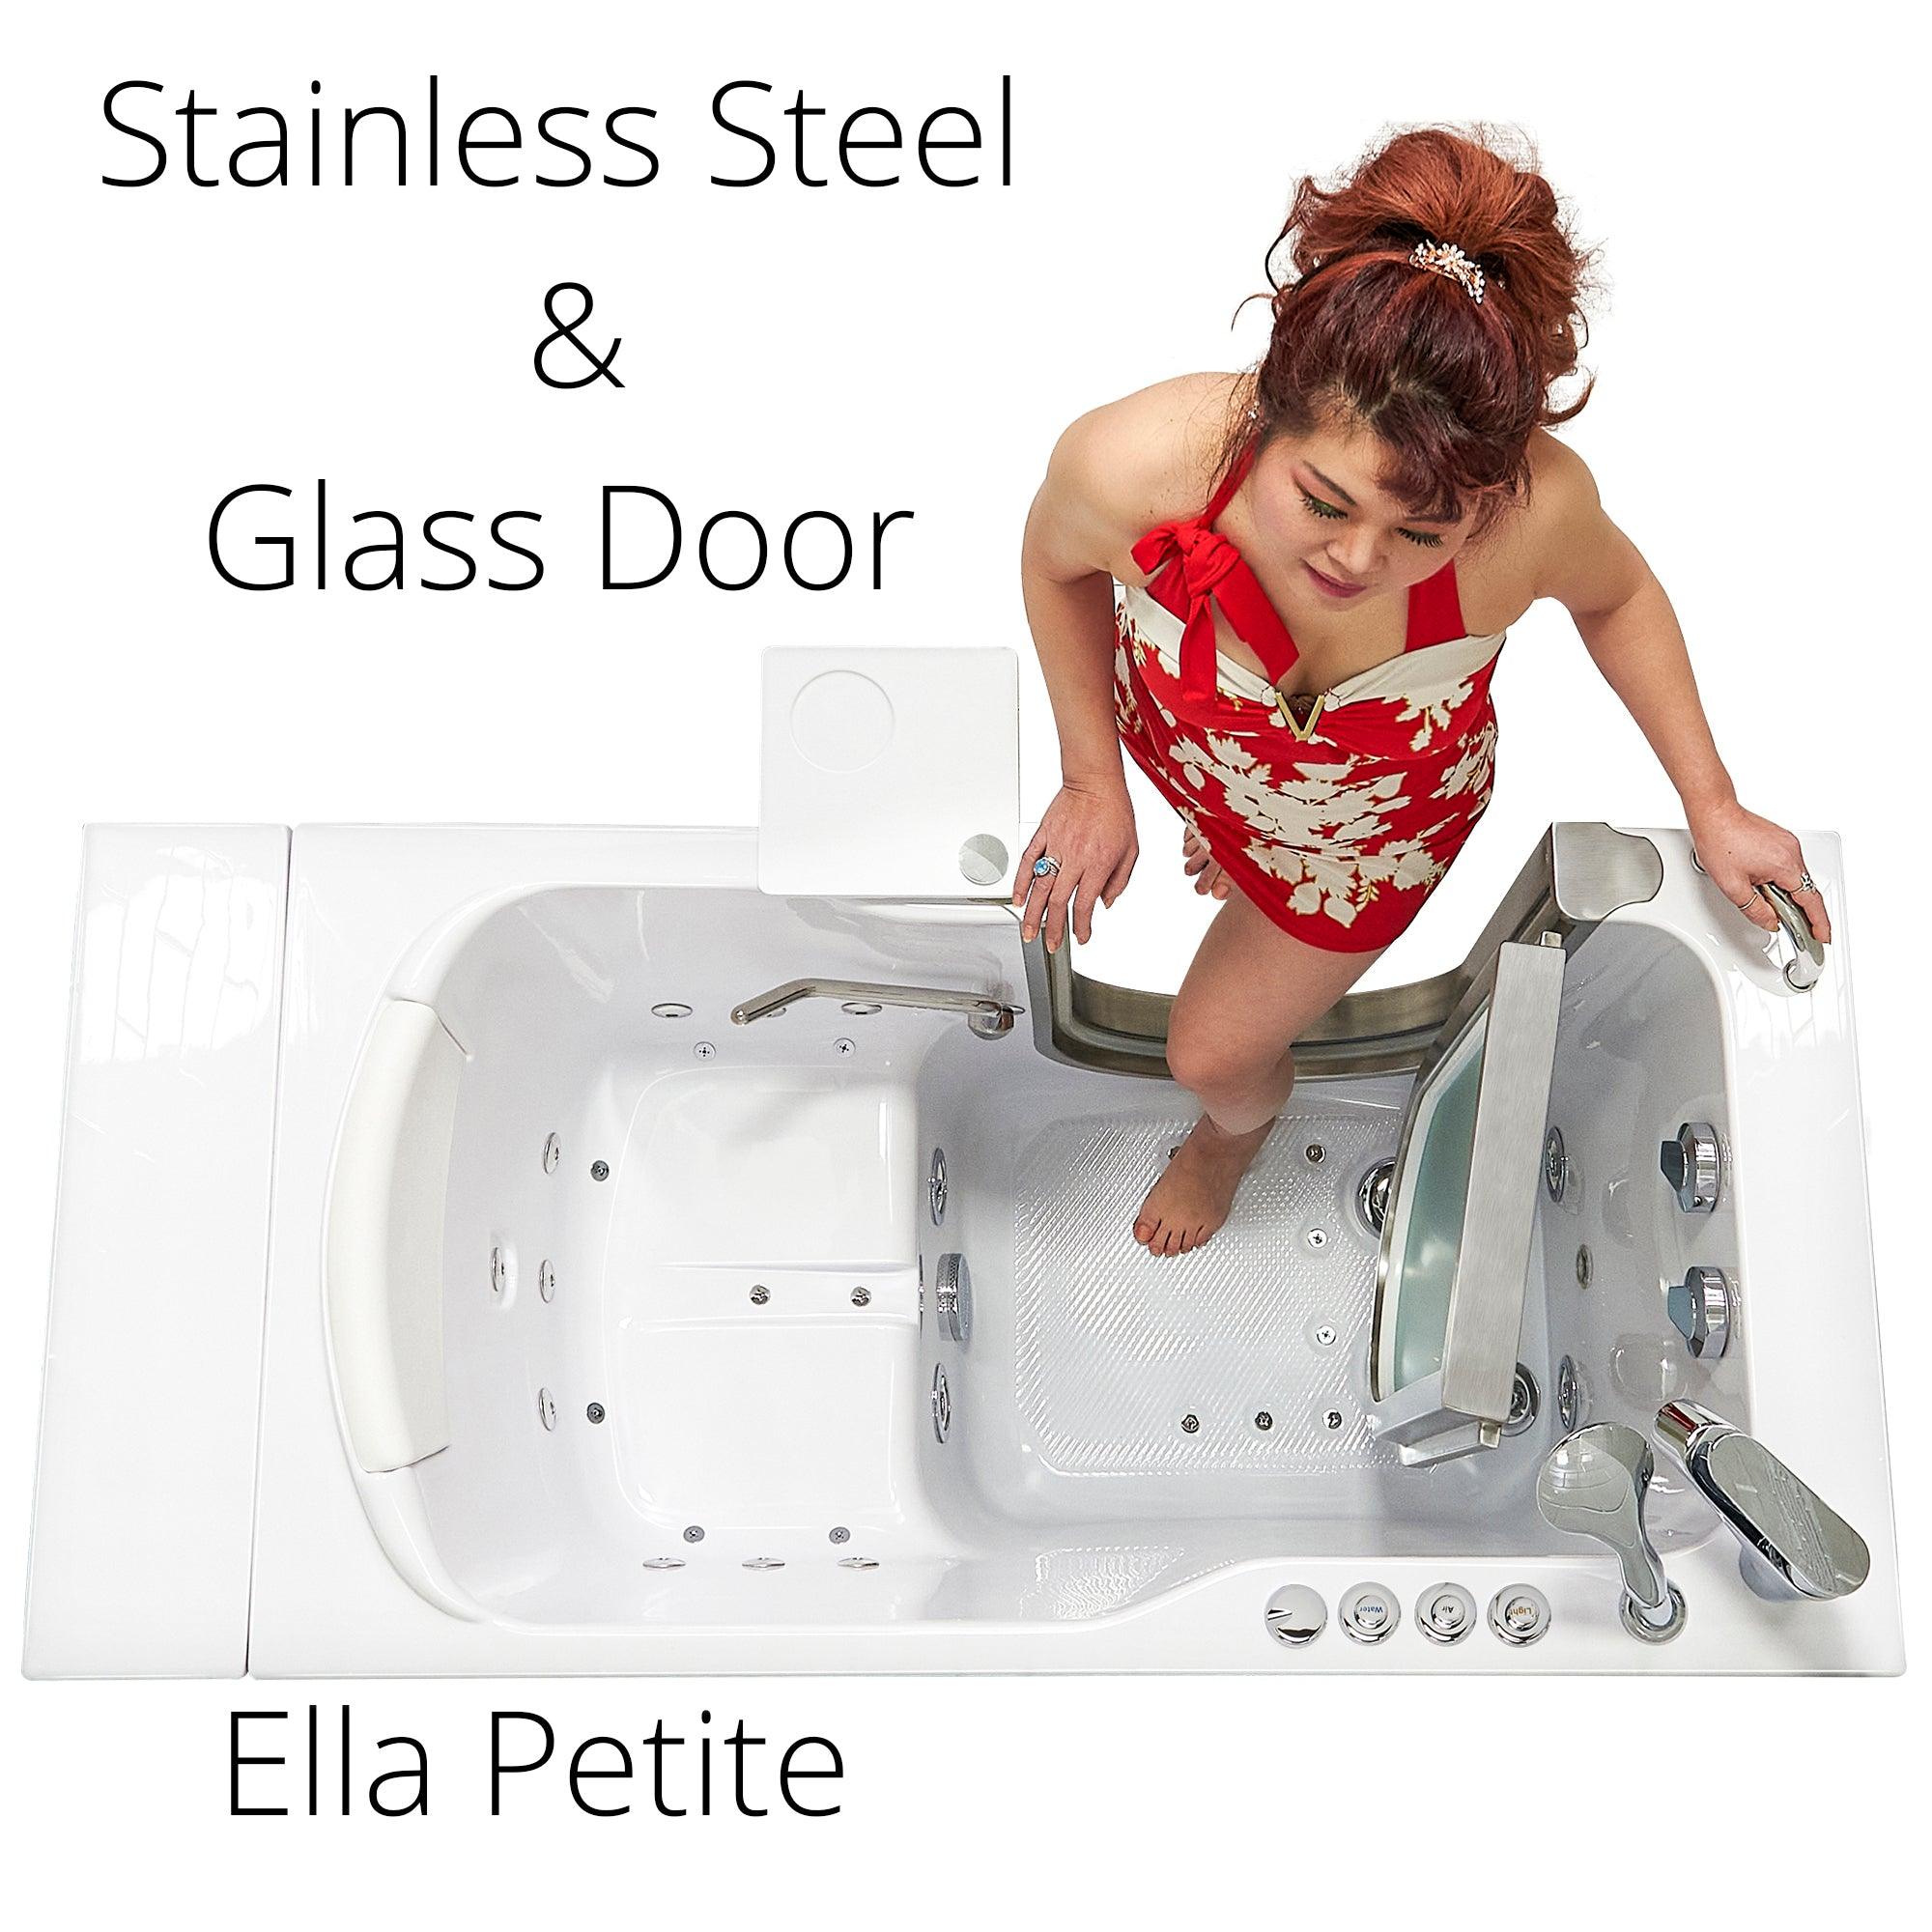 Ella Peitite 28"x52" Acrylic Air and Hydro Massage Walk-In Bathtub with Inward Swinging Door - Bathroom Design Center